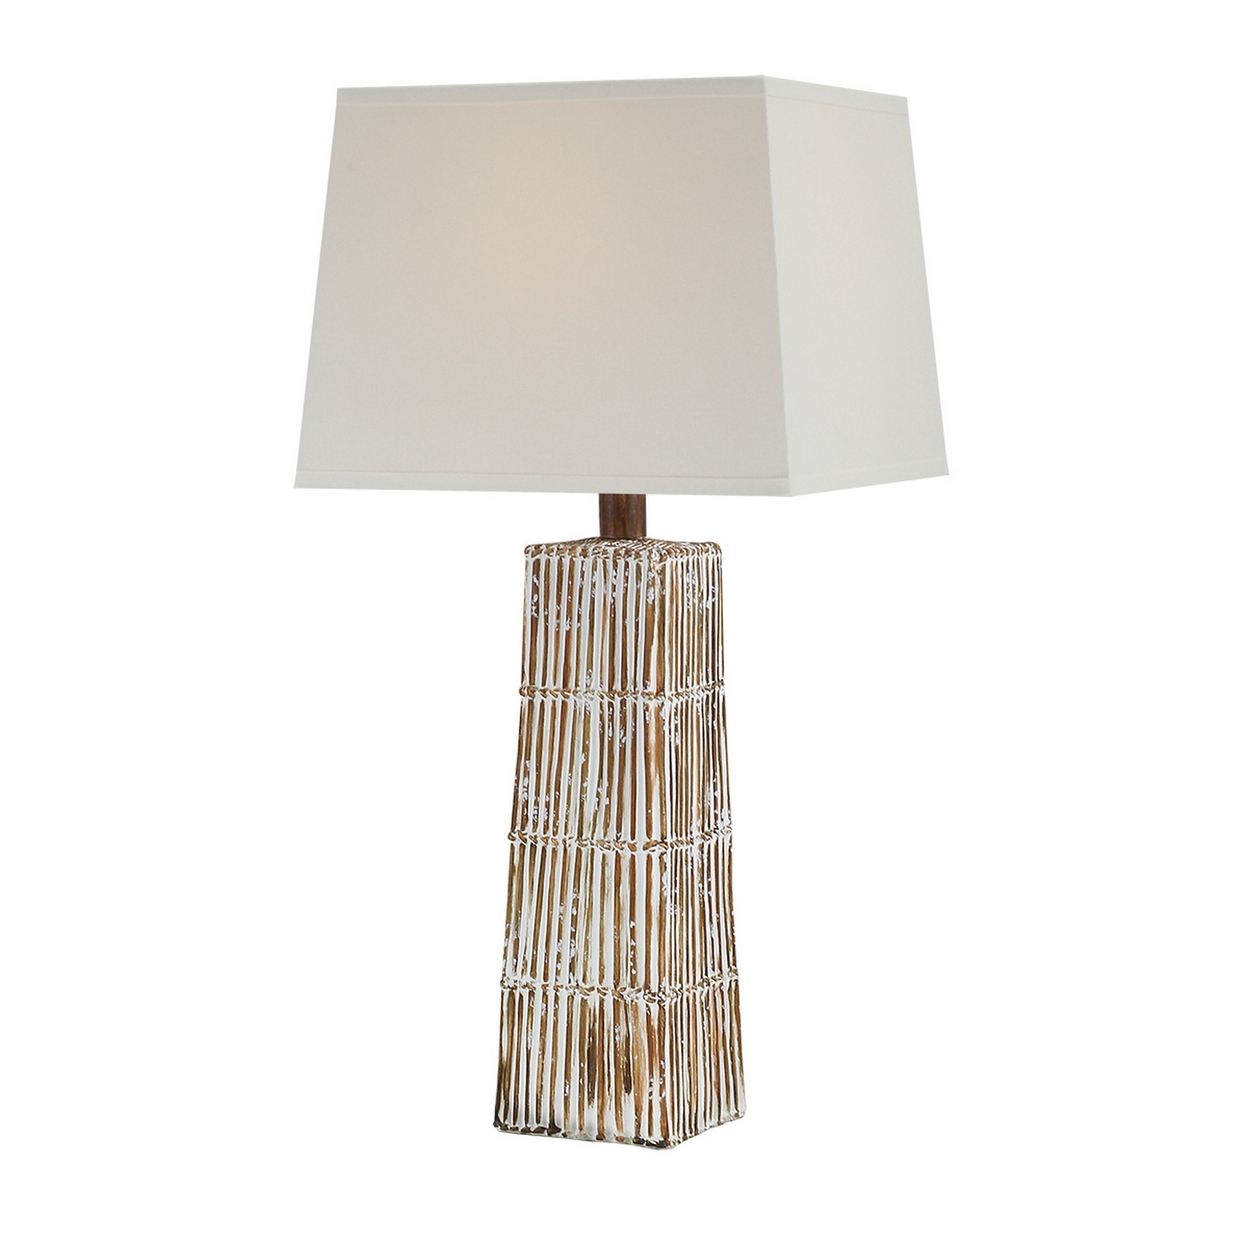 Fila 29 Inch Table Lamp, White Square Shade, Elongated Body, Bamboo Brown - Saltoro Sherpi